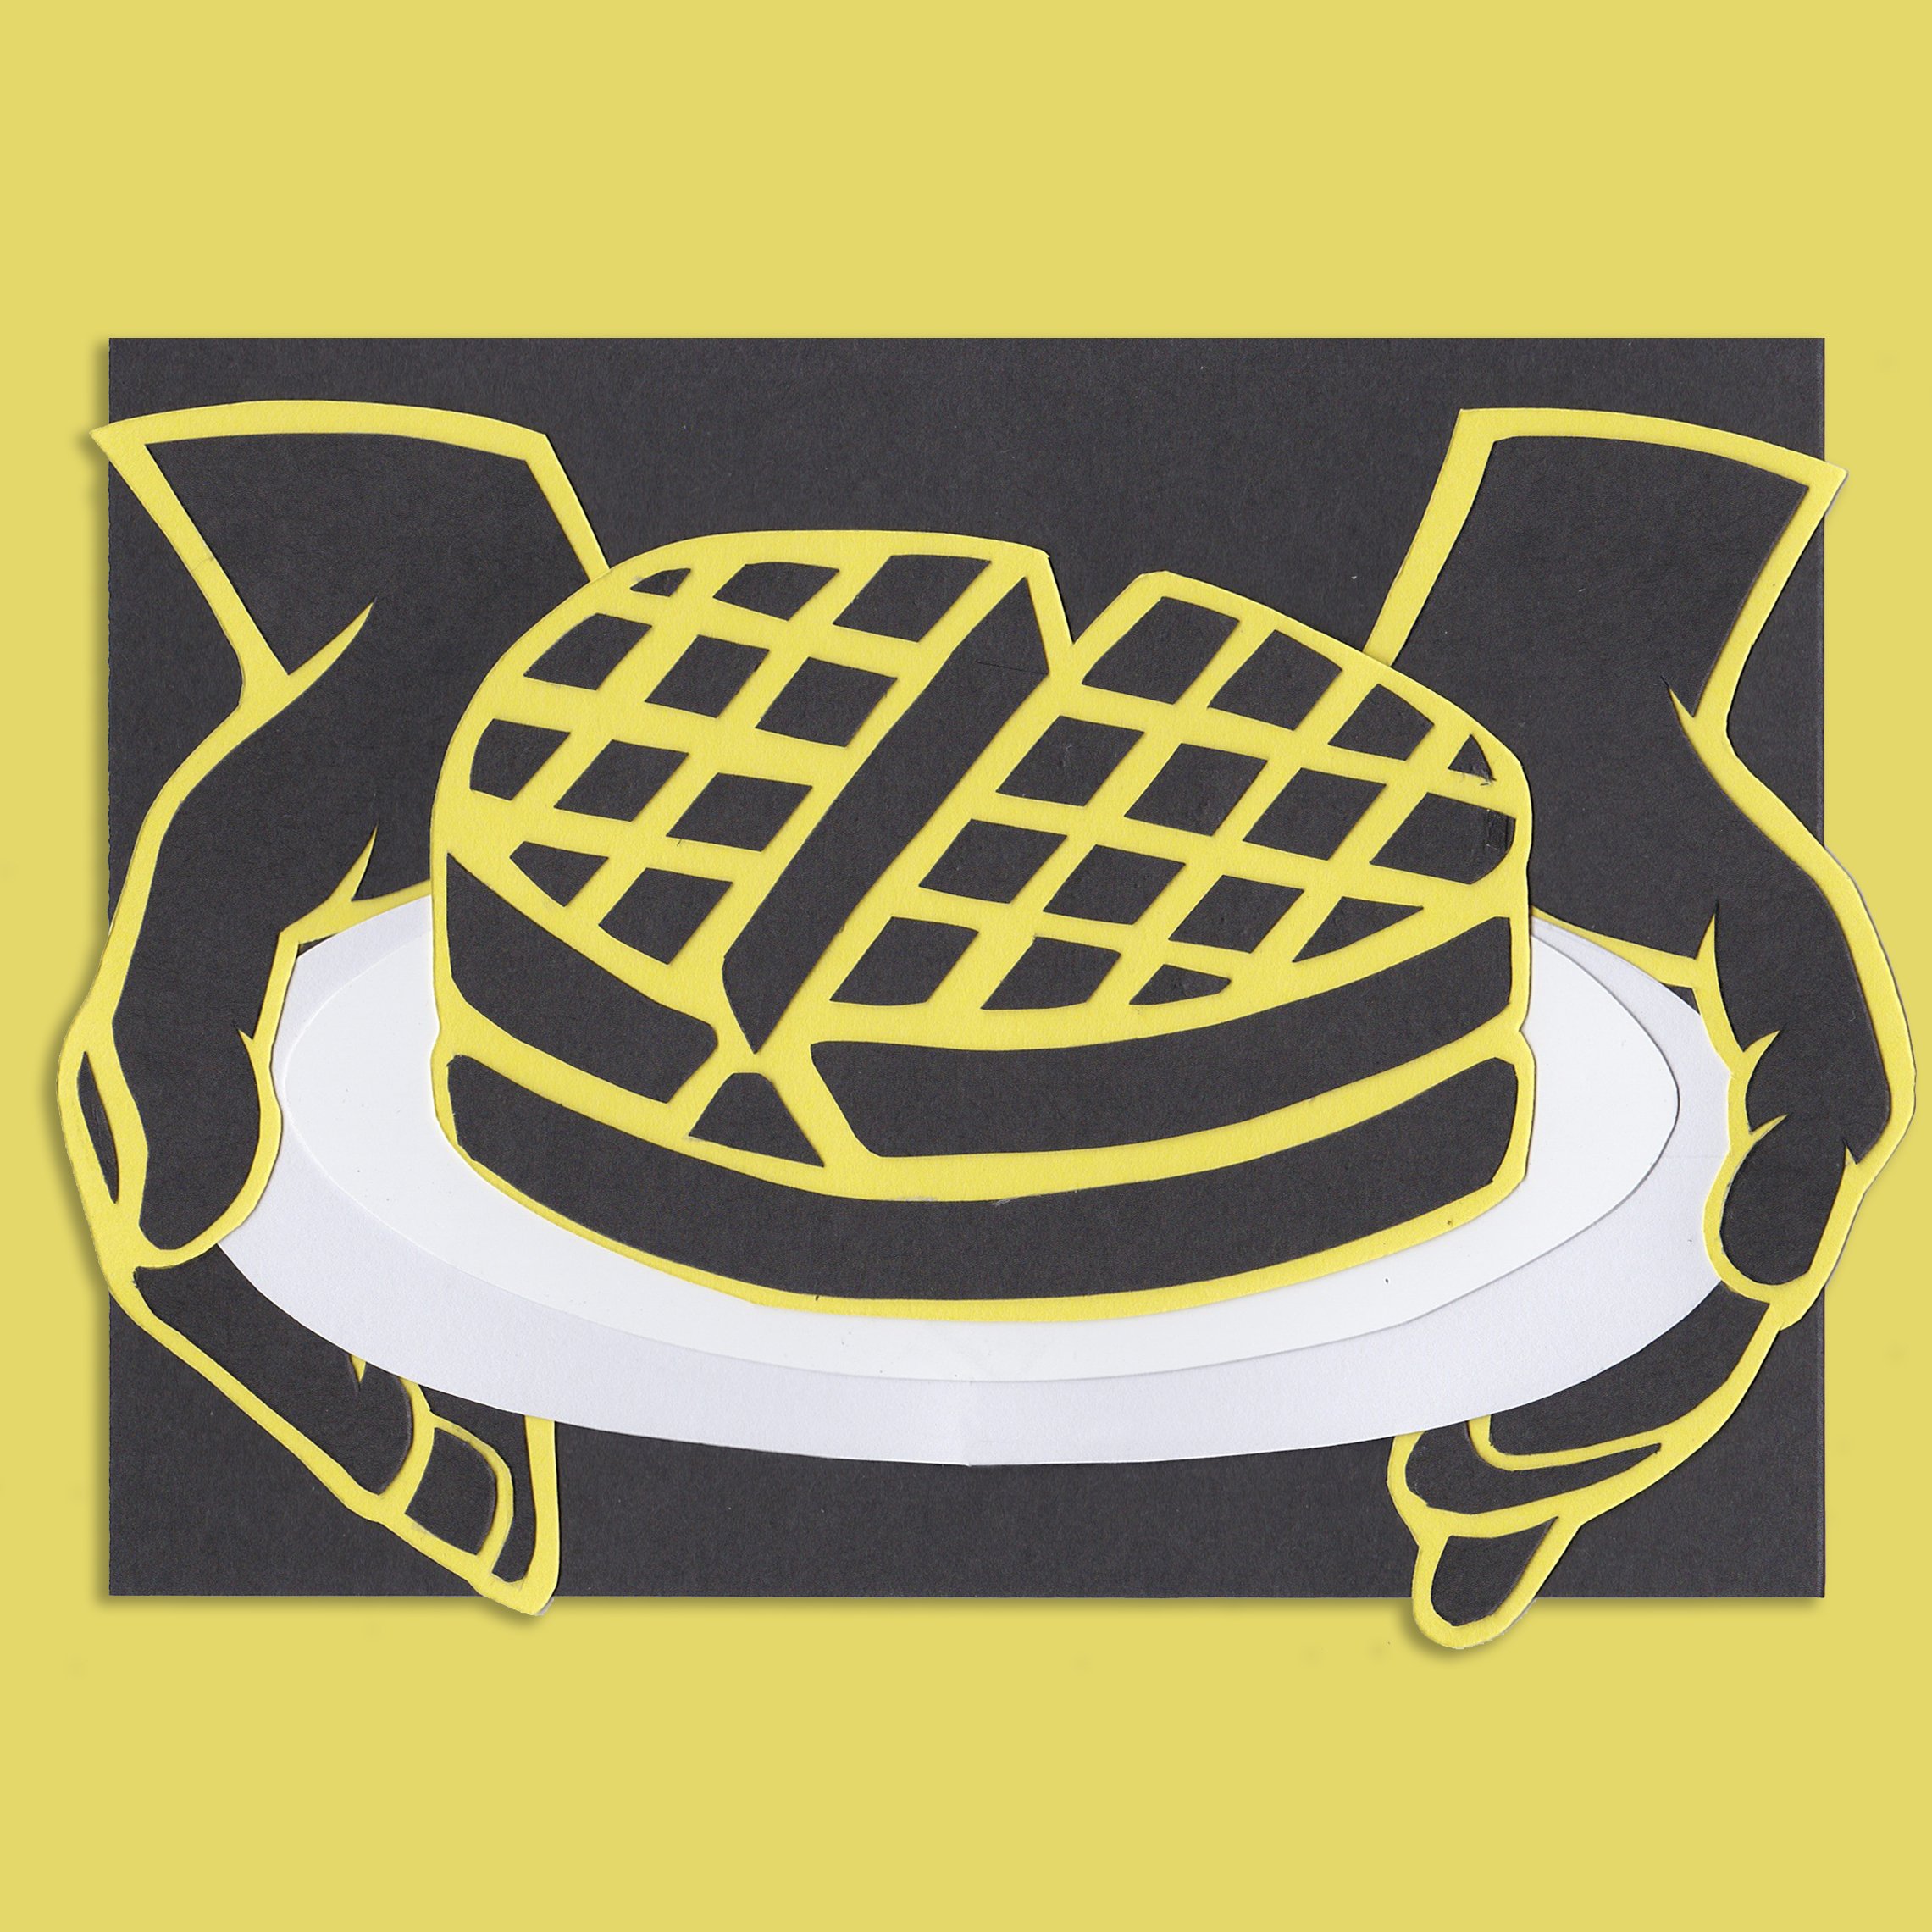 National Waffle Week (☹)